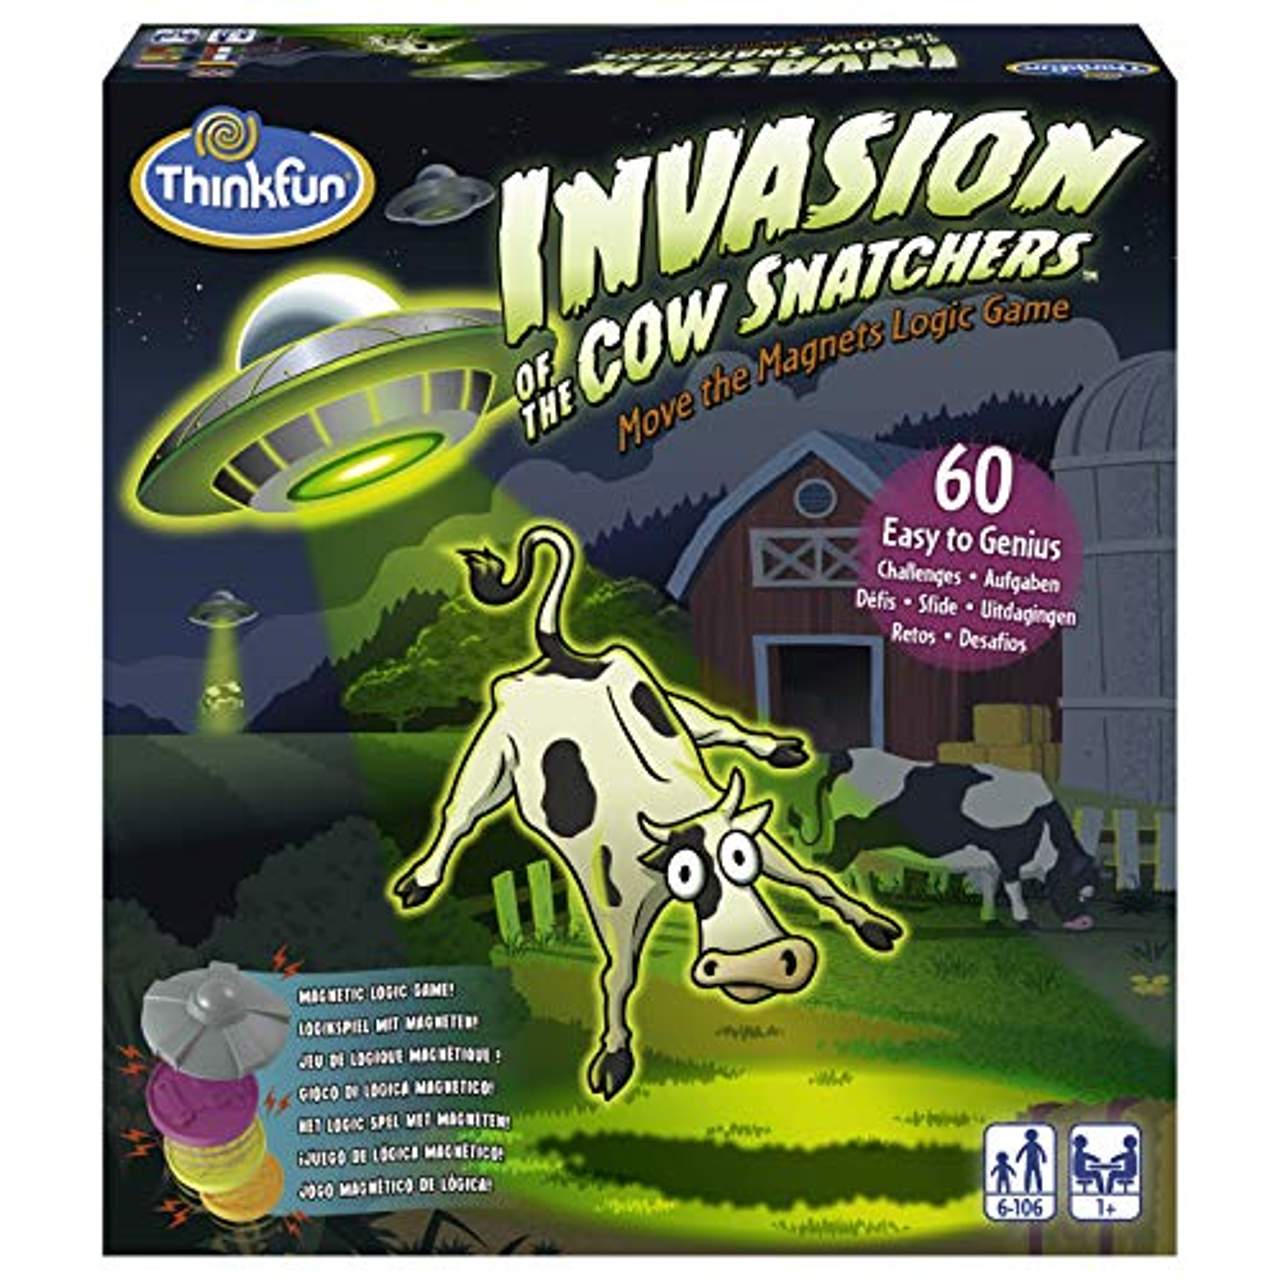 ThinkFun 76374 Invasion of the Cow Snatchers